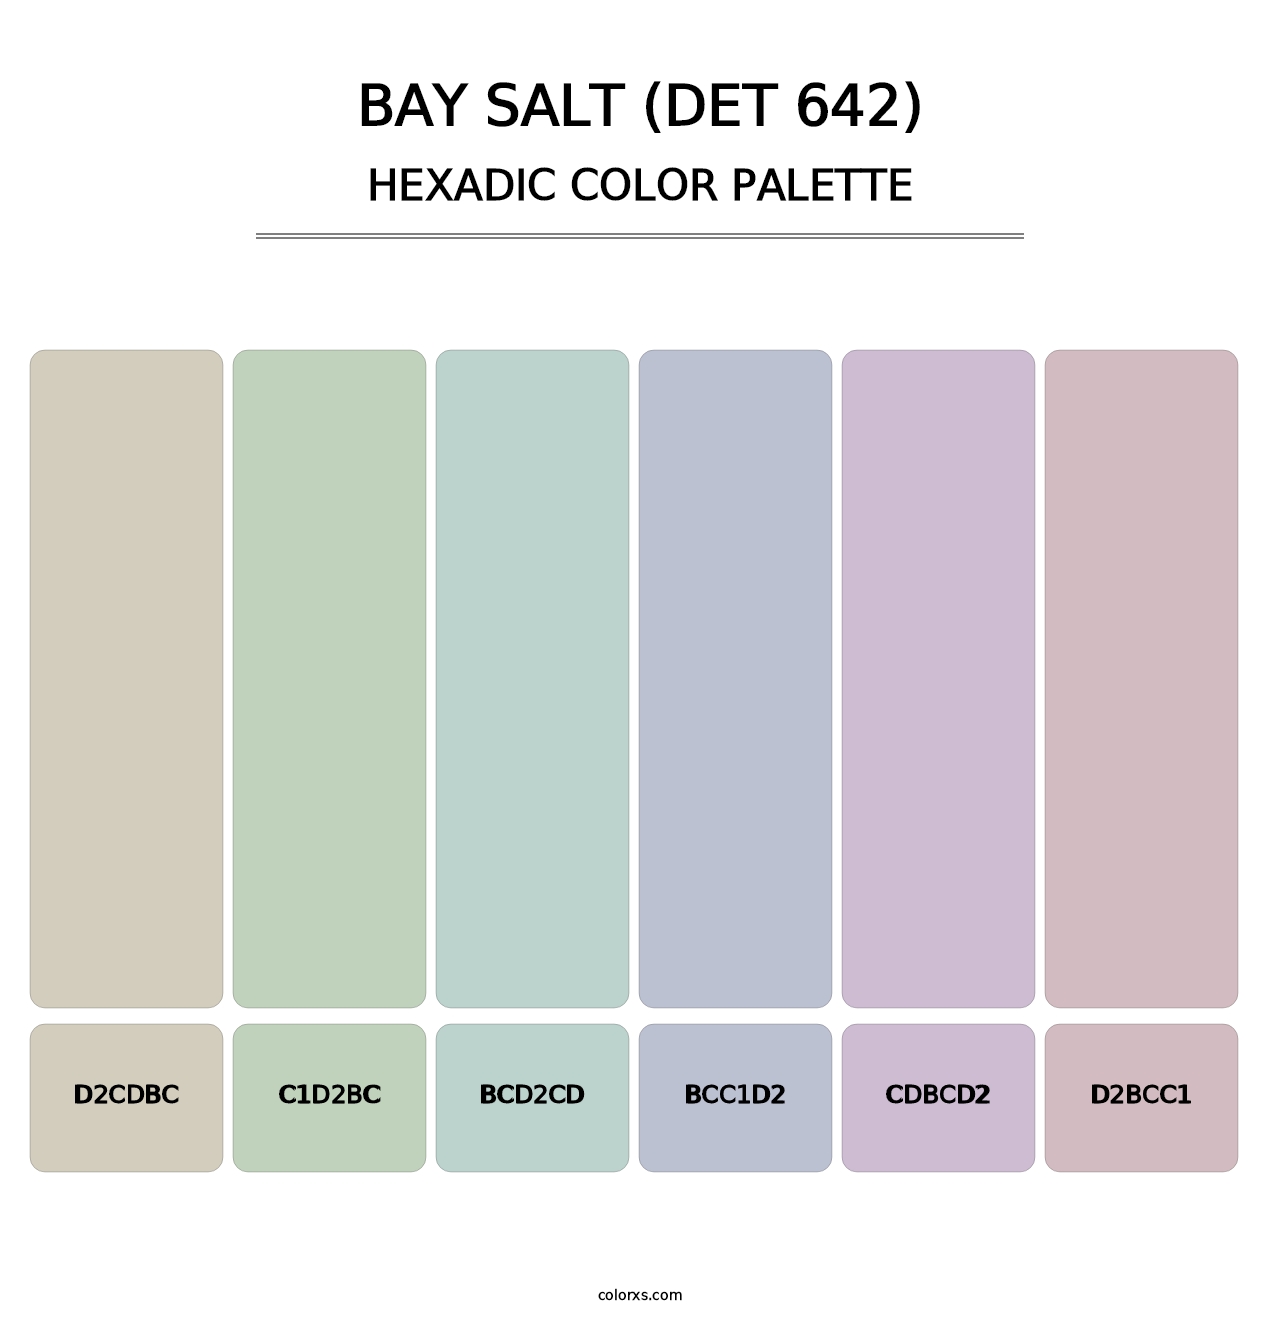 Bay Salt (DET 642) - Hexadic Color Palette